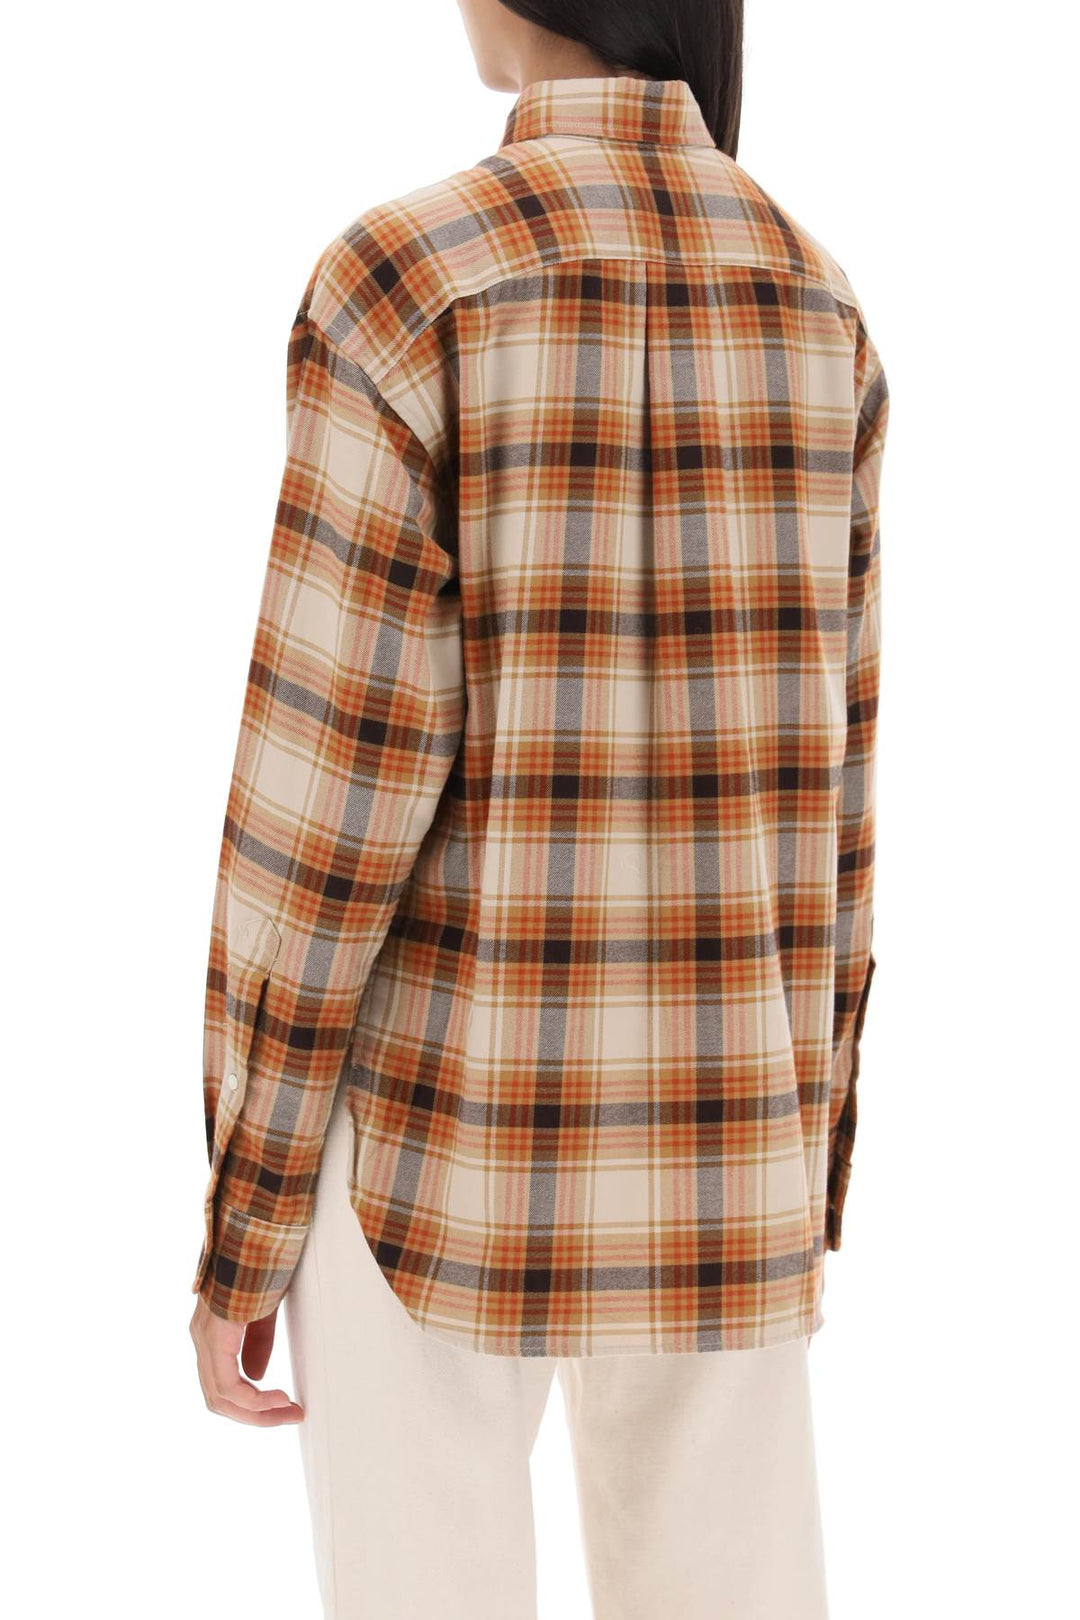 Polo Ralph Lauren Check Flannel Shirt   Beige